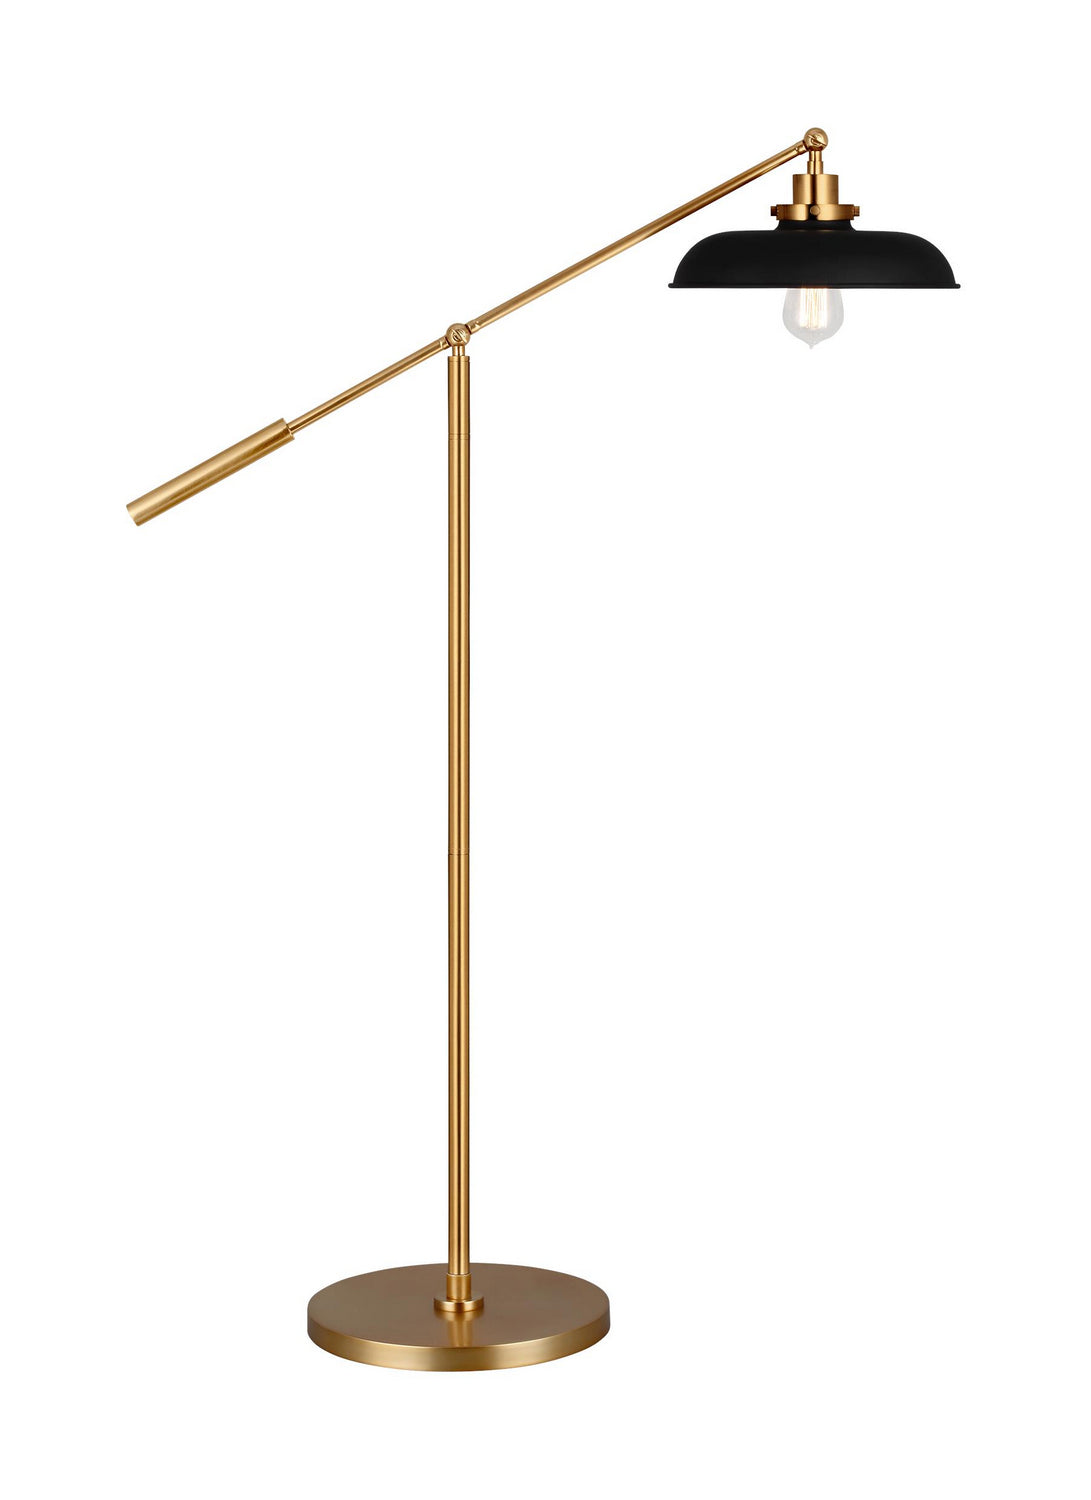 Visual Comfort Studio Canada - One Light Floor Lamp - Wellfleet - Midnight Black and Burnished Brass- Union Lighting Luminaires Decor